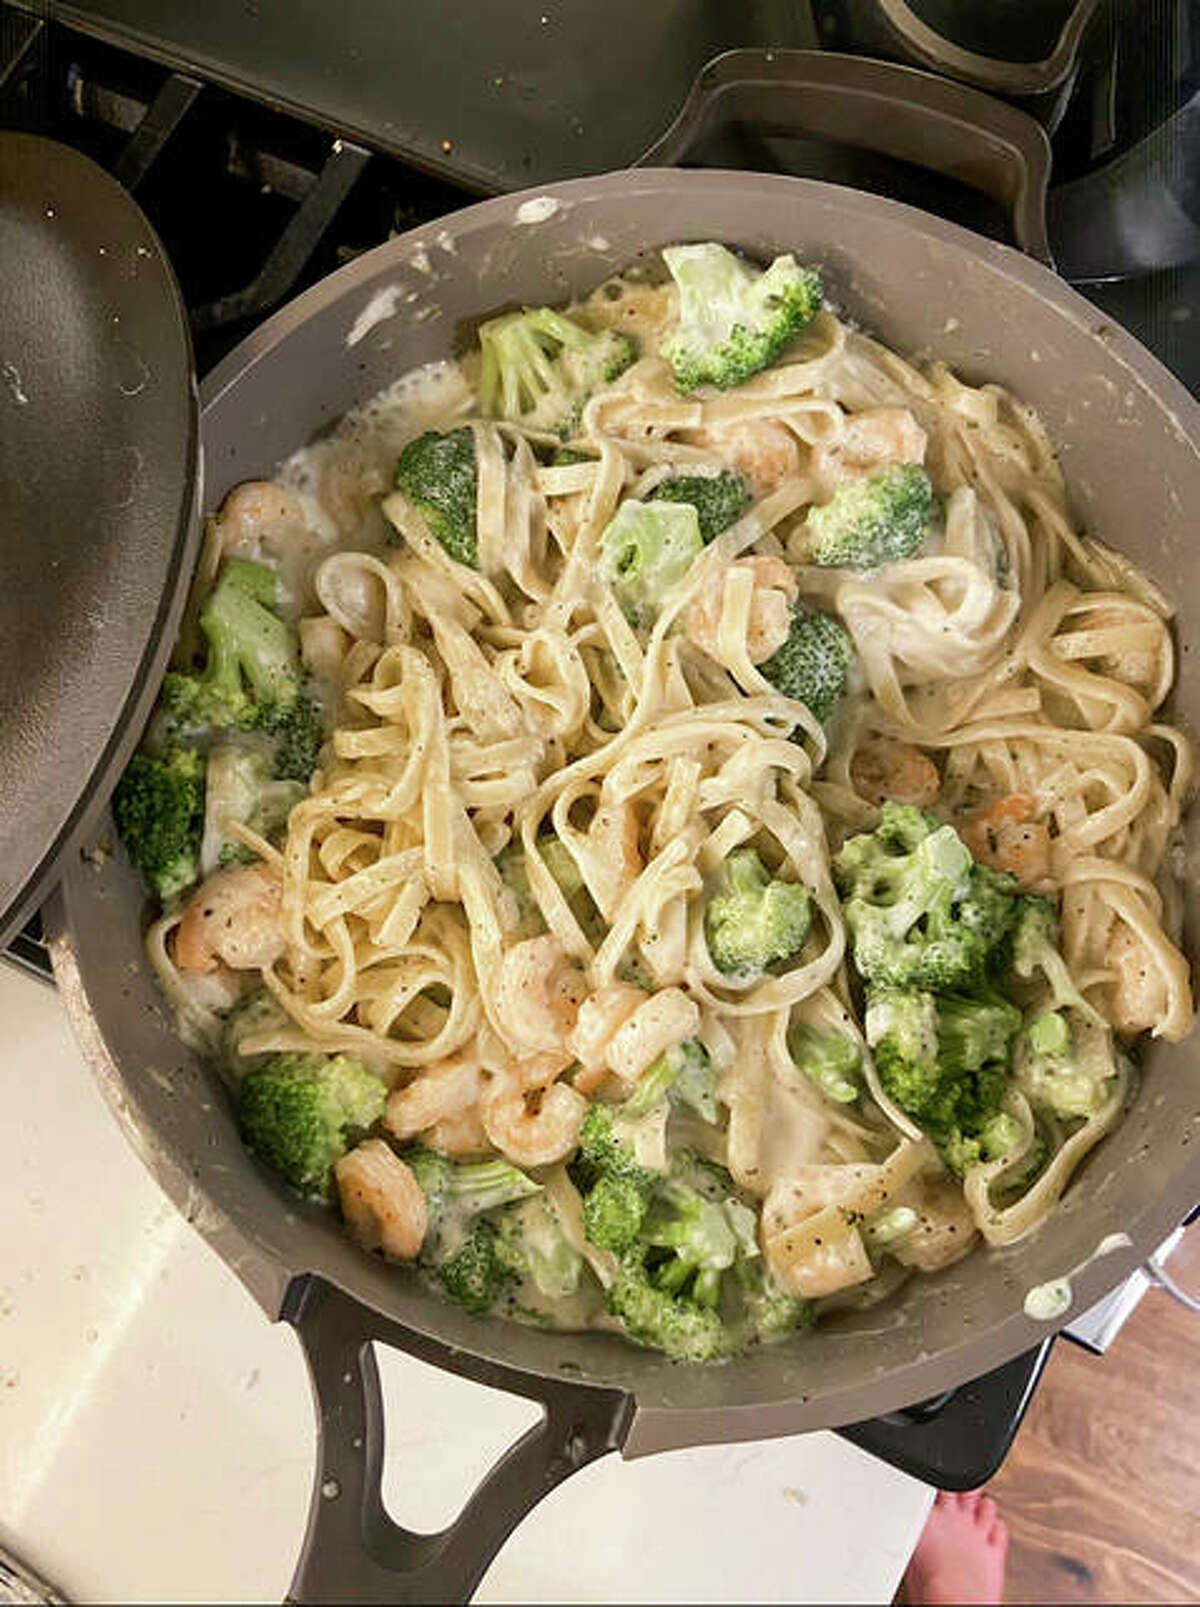 Lemon pepper shrimp and broccoli pasta make for an enjoyable meal.